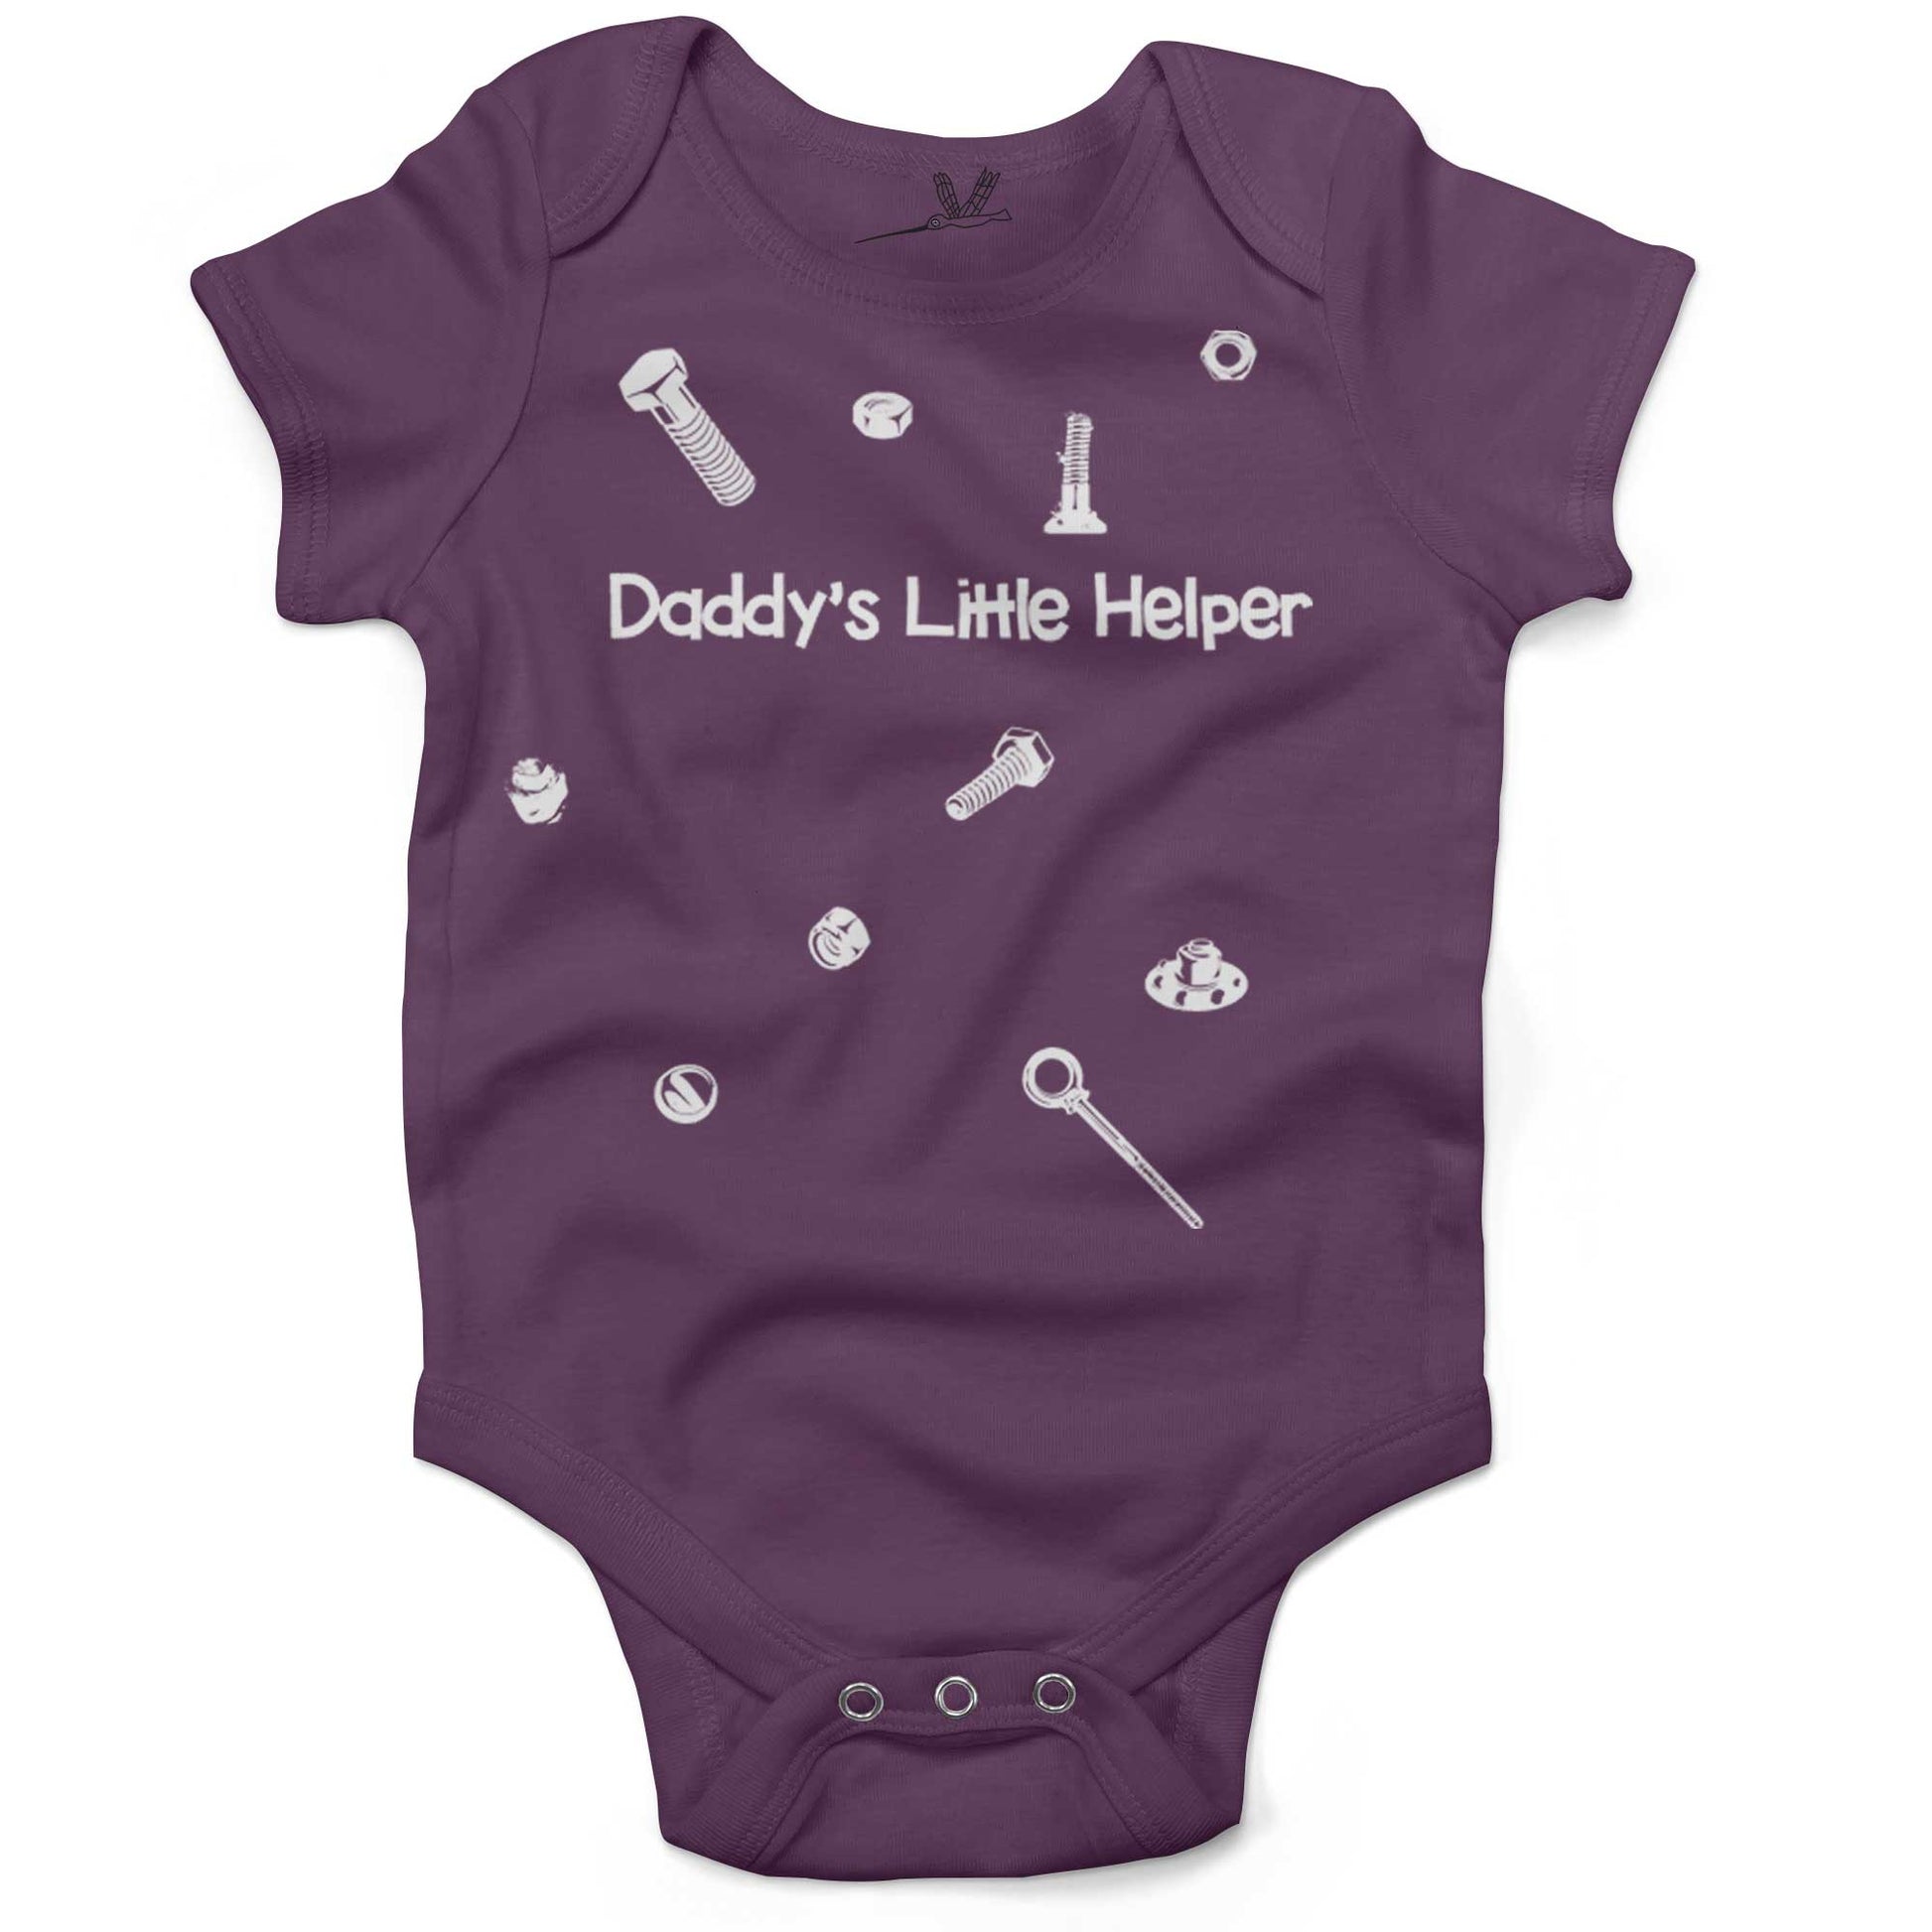 Daddy's Little Helper Infant Bodysuit or Raglan Baby Tee-Organic Purple-3-6 months